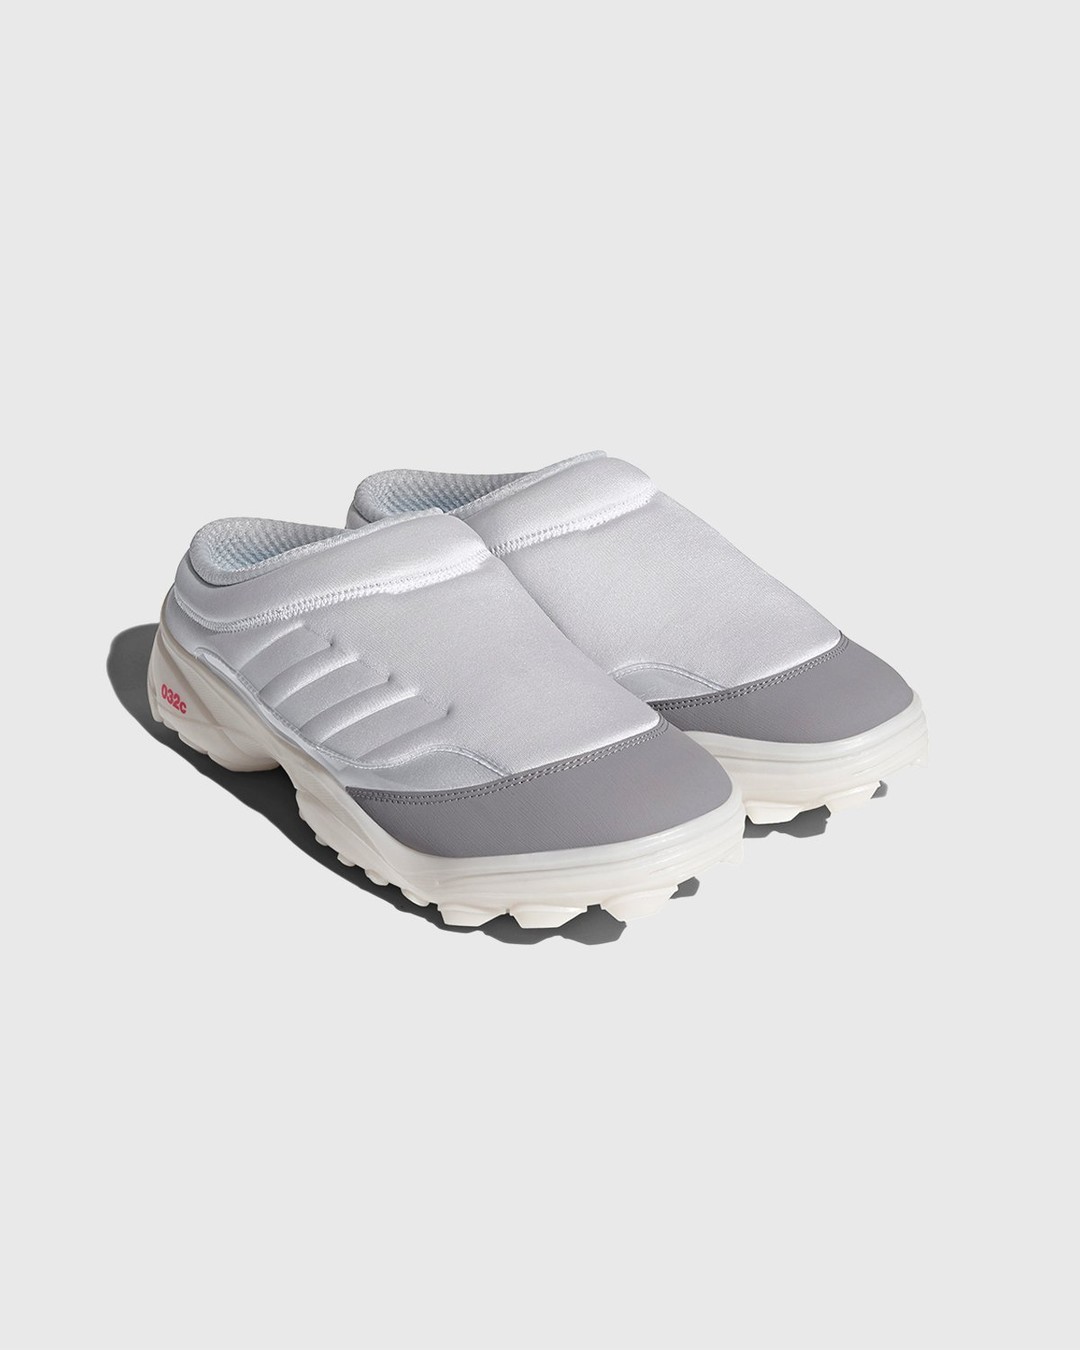 Adidas x 032c – GSG Mule Greone - Shoes - White - Image 3